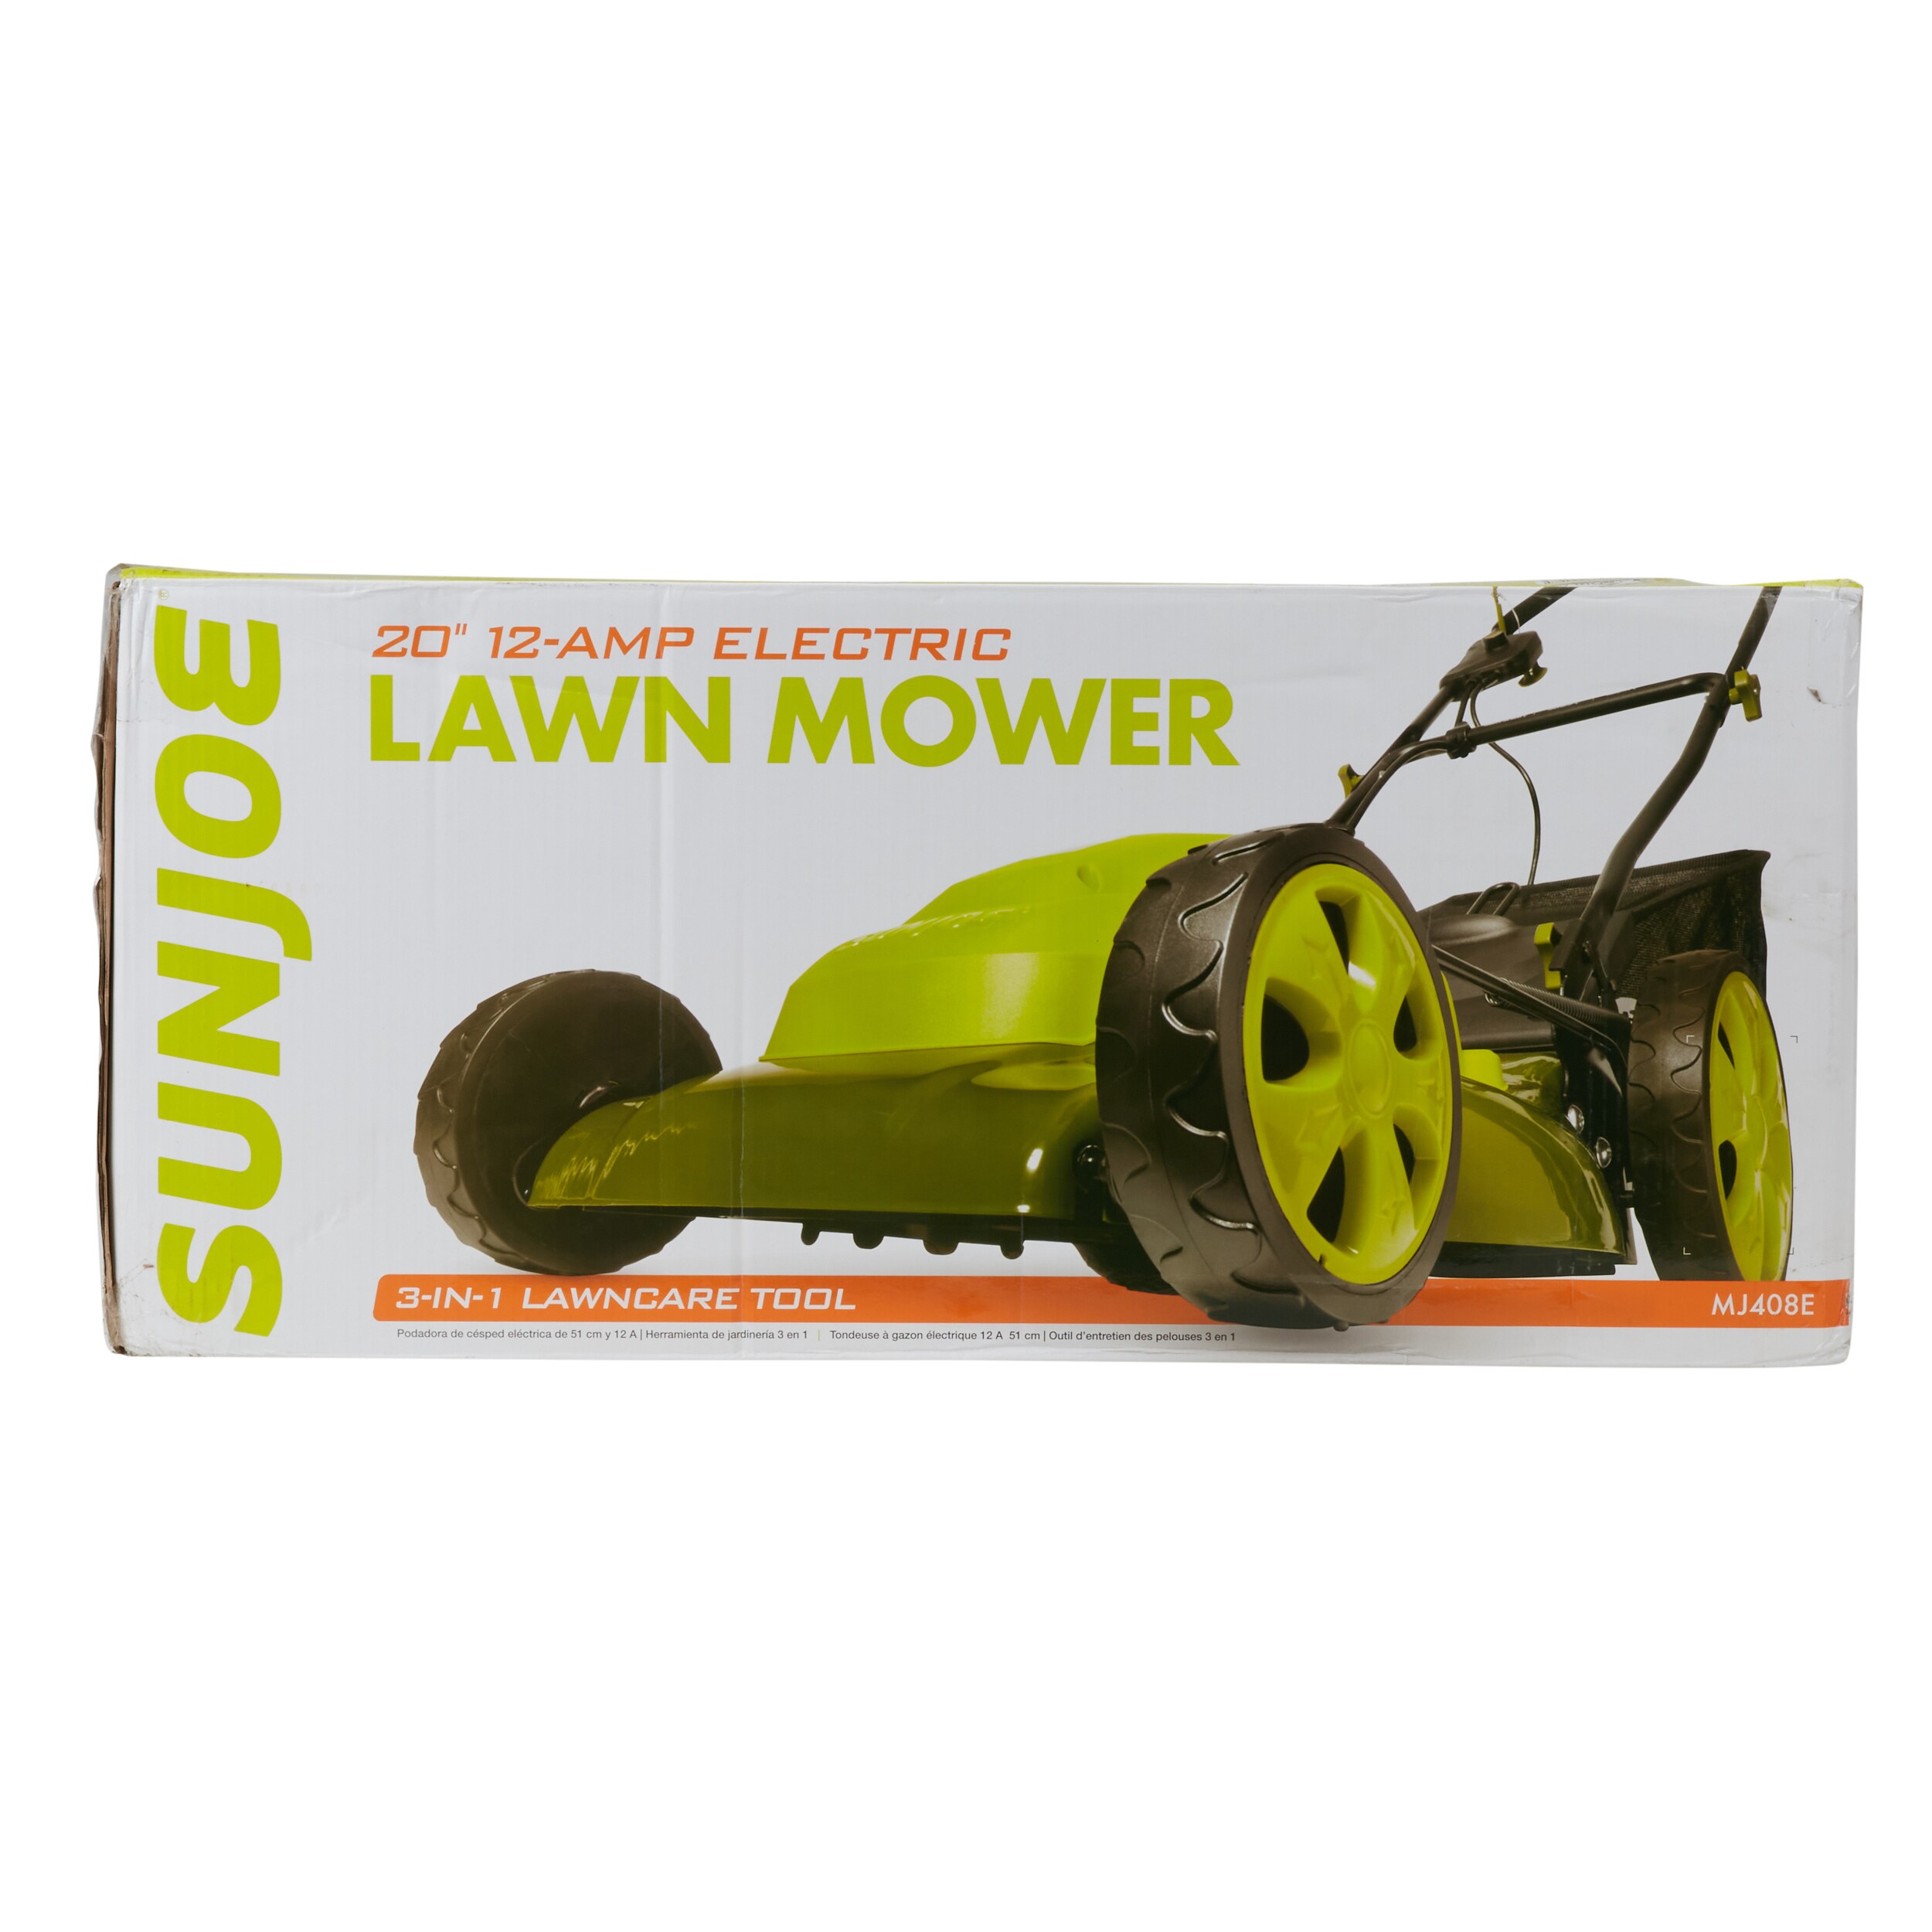 Sun Joe Replacement Parts for MJ408E Lawn Mower (C)